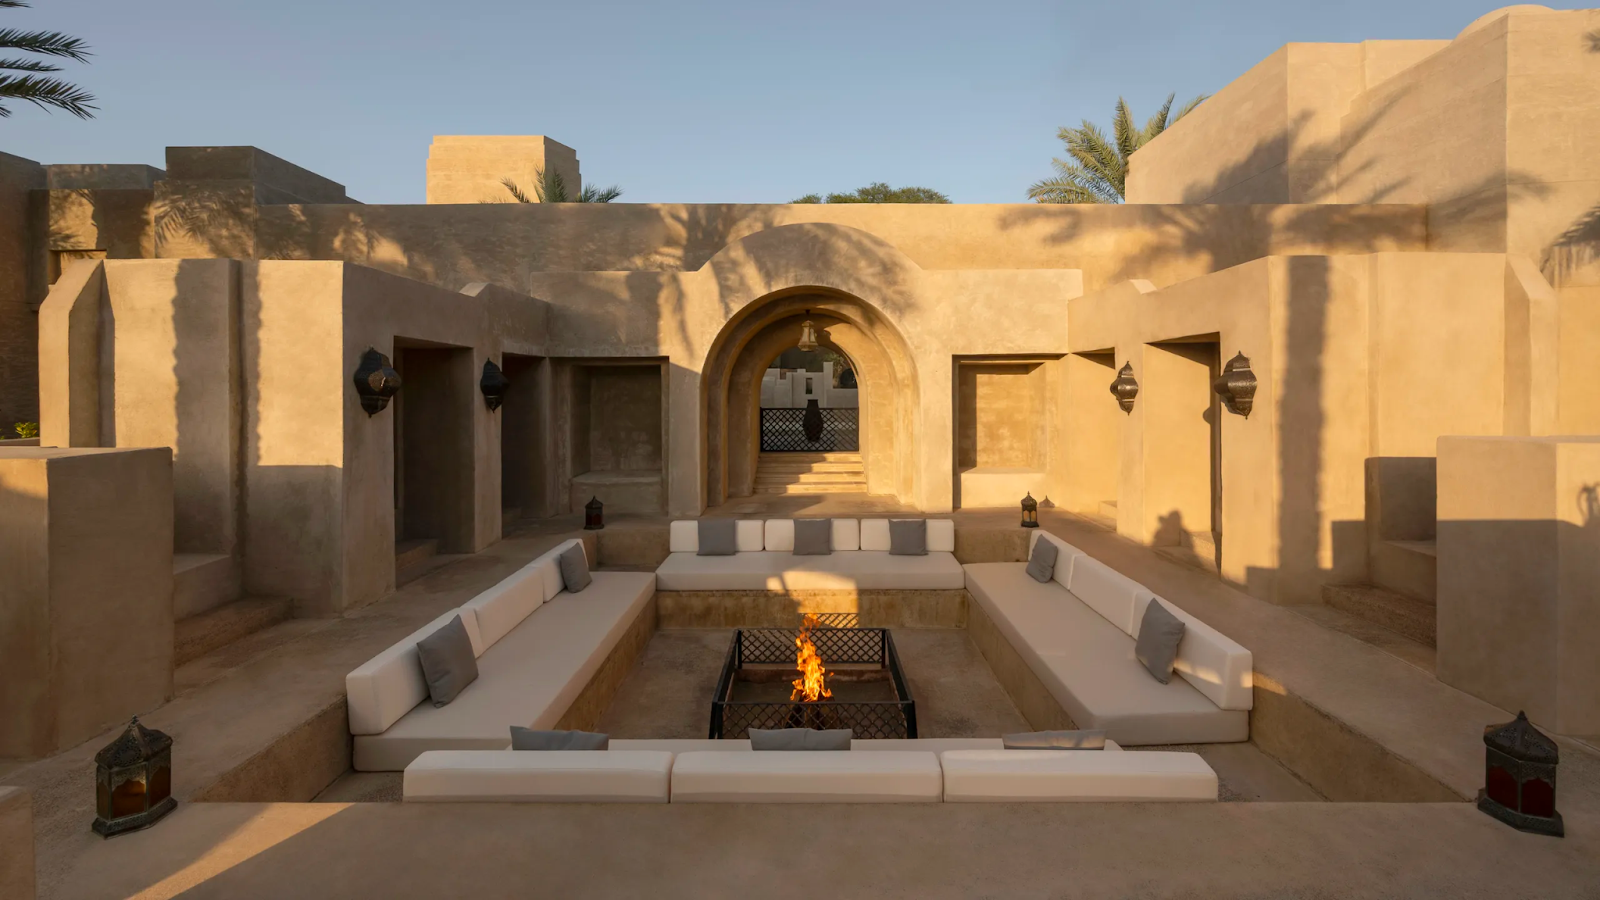 Bab Al Shams Desert Resort: